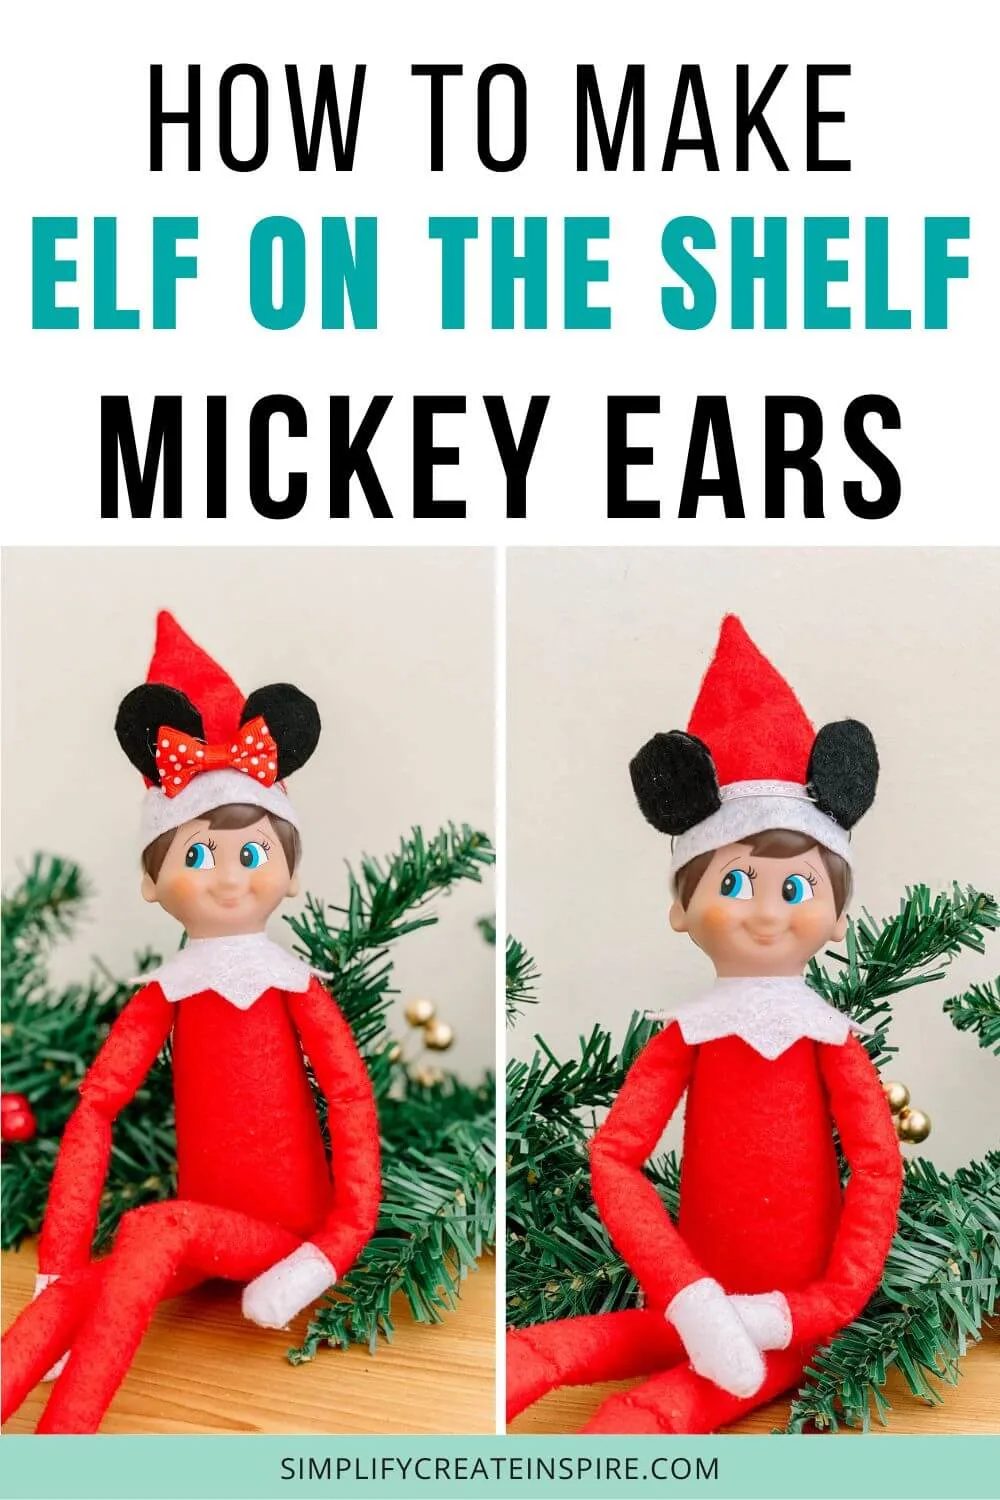 How to make elf on the shelf mickey ears